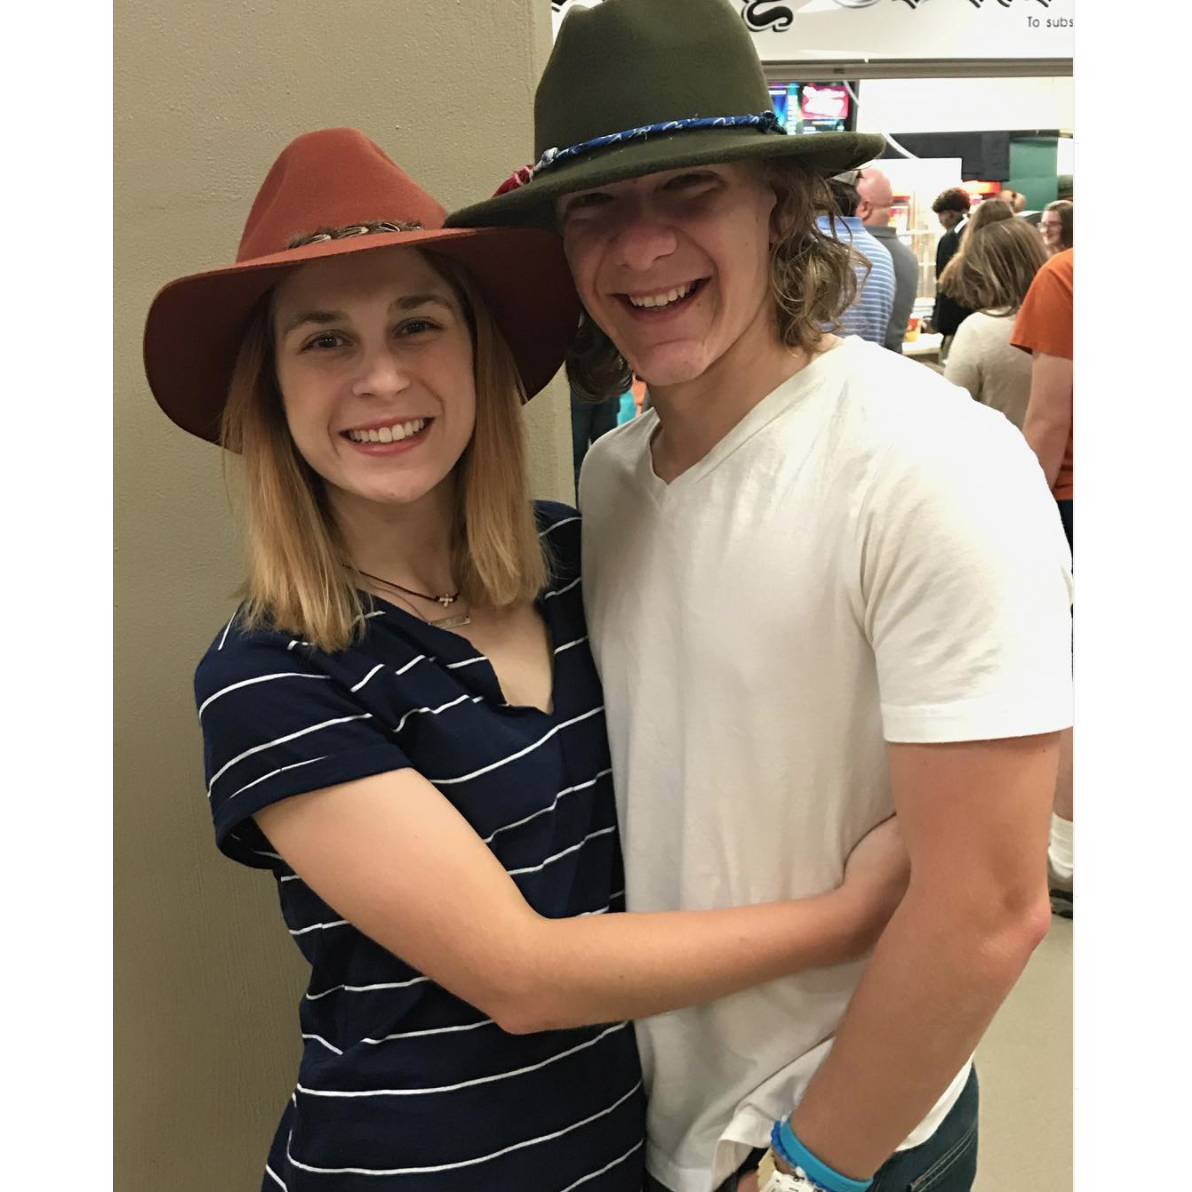 We enjoy hats